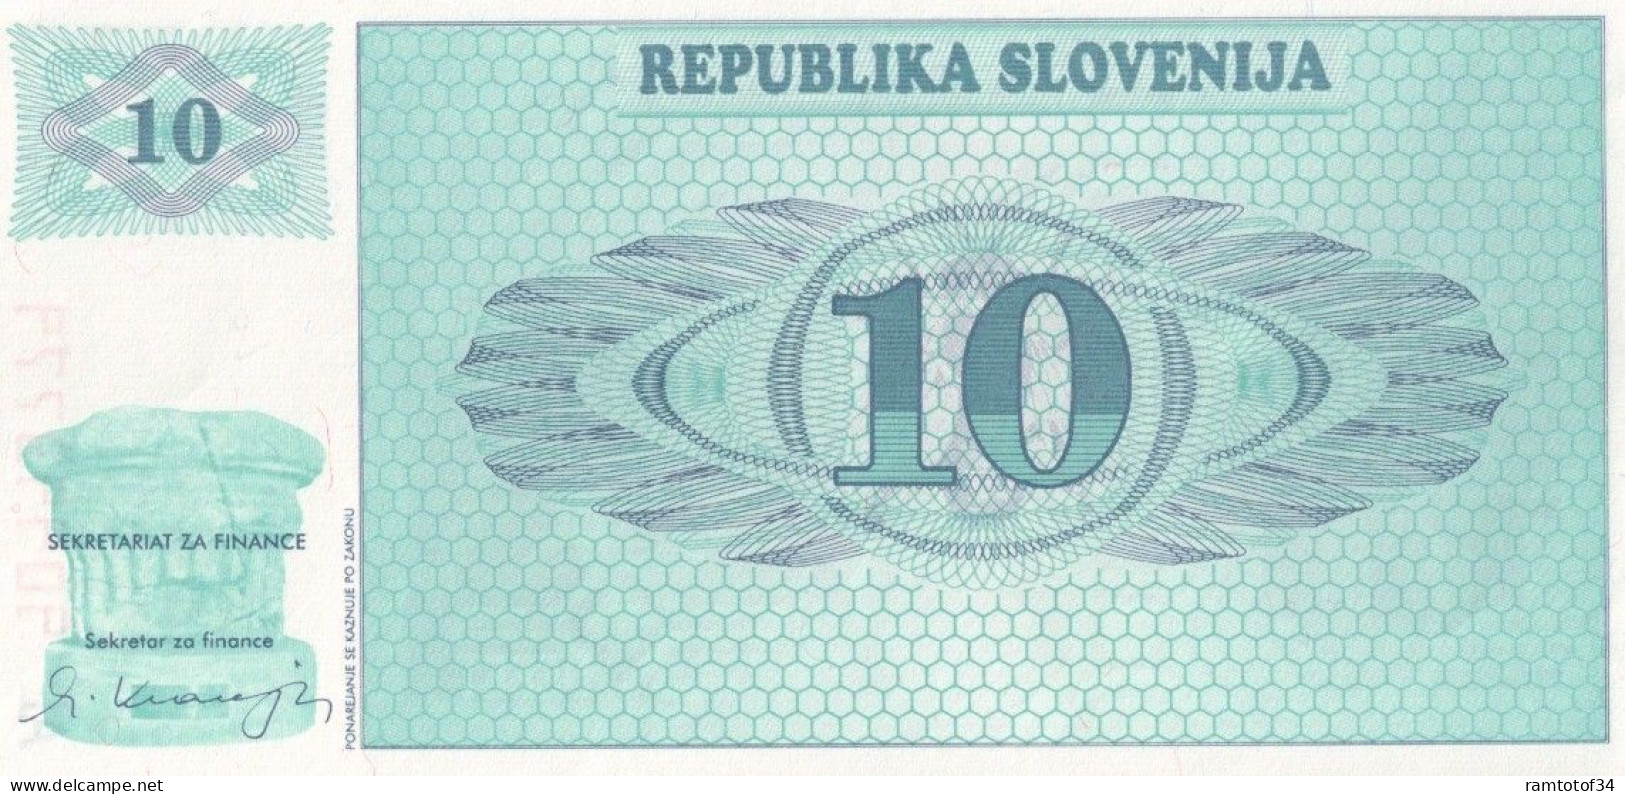 SLOVENIE - 10 Tolar 1990 UNC - Slovenia